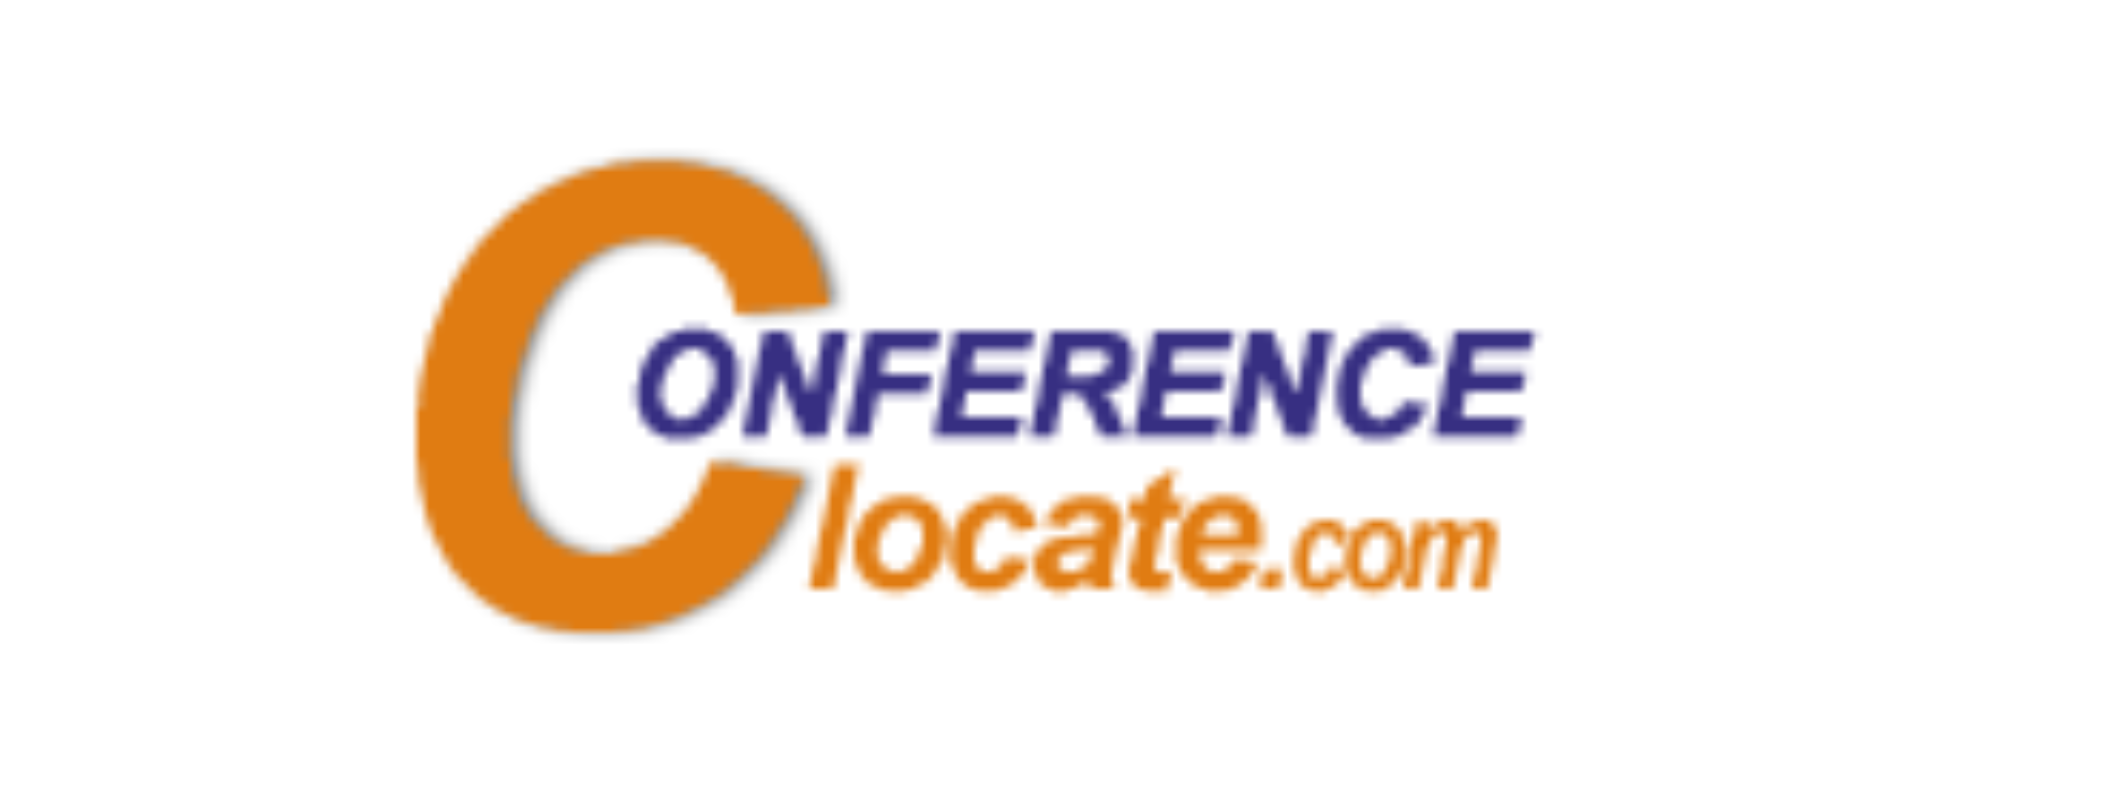 Conference Locate-1